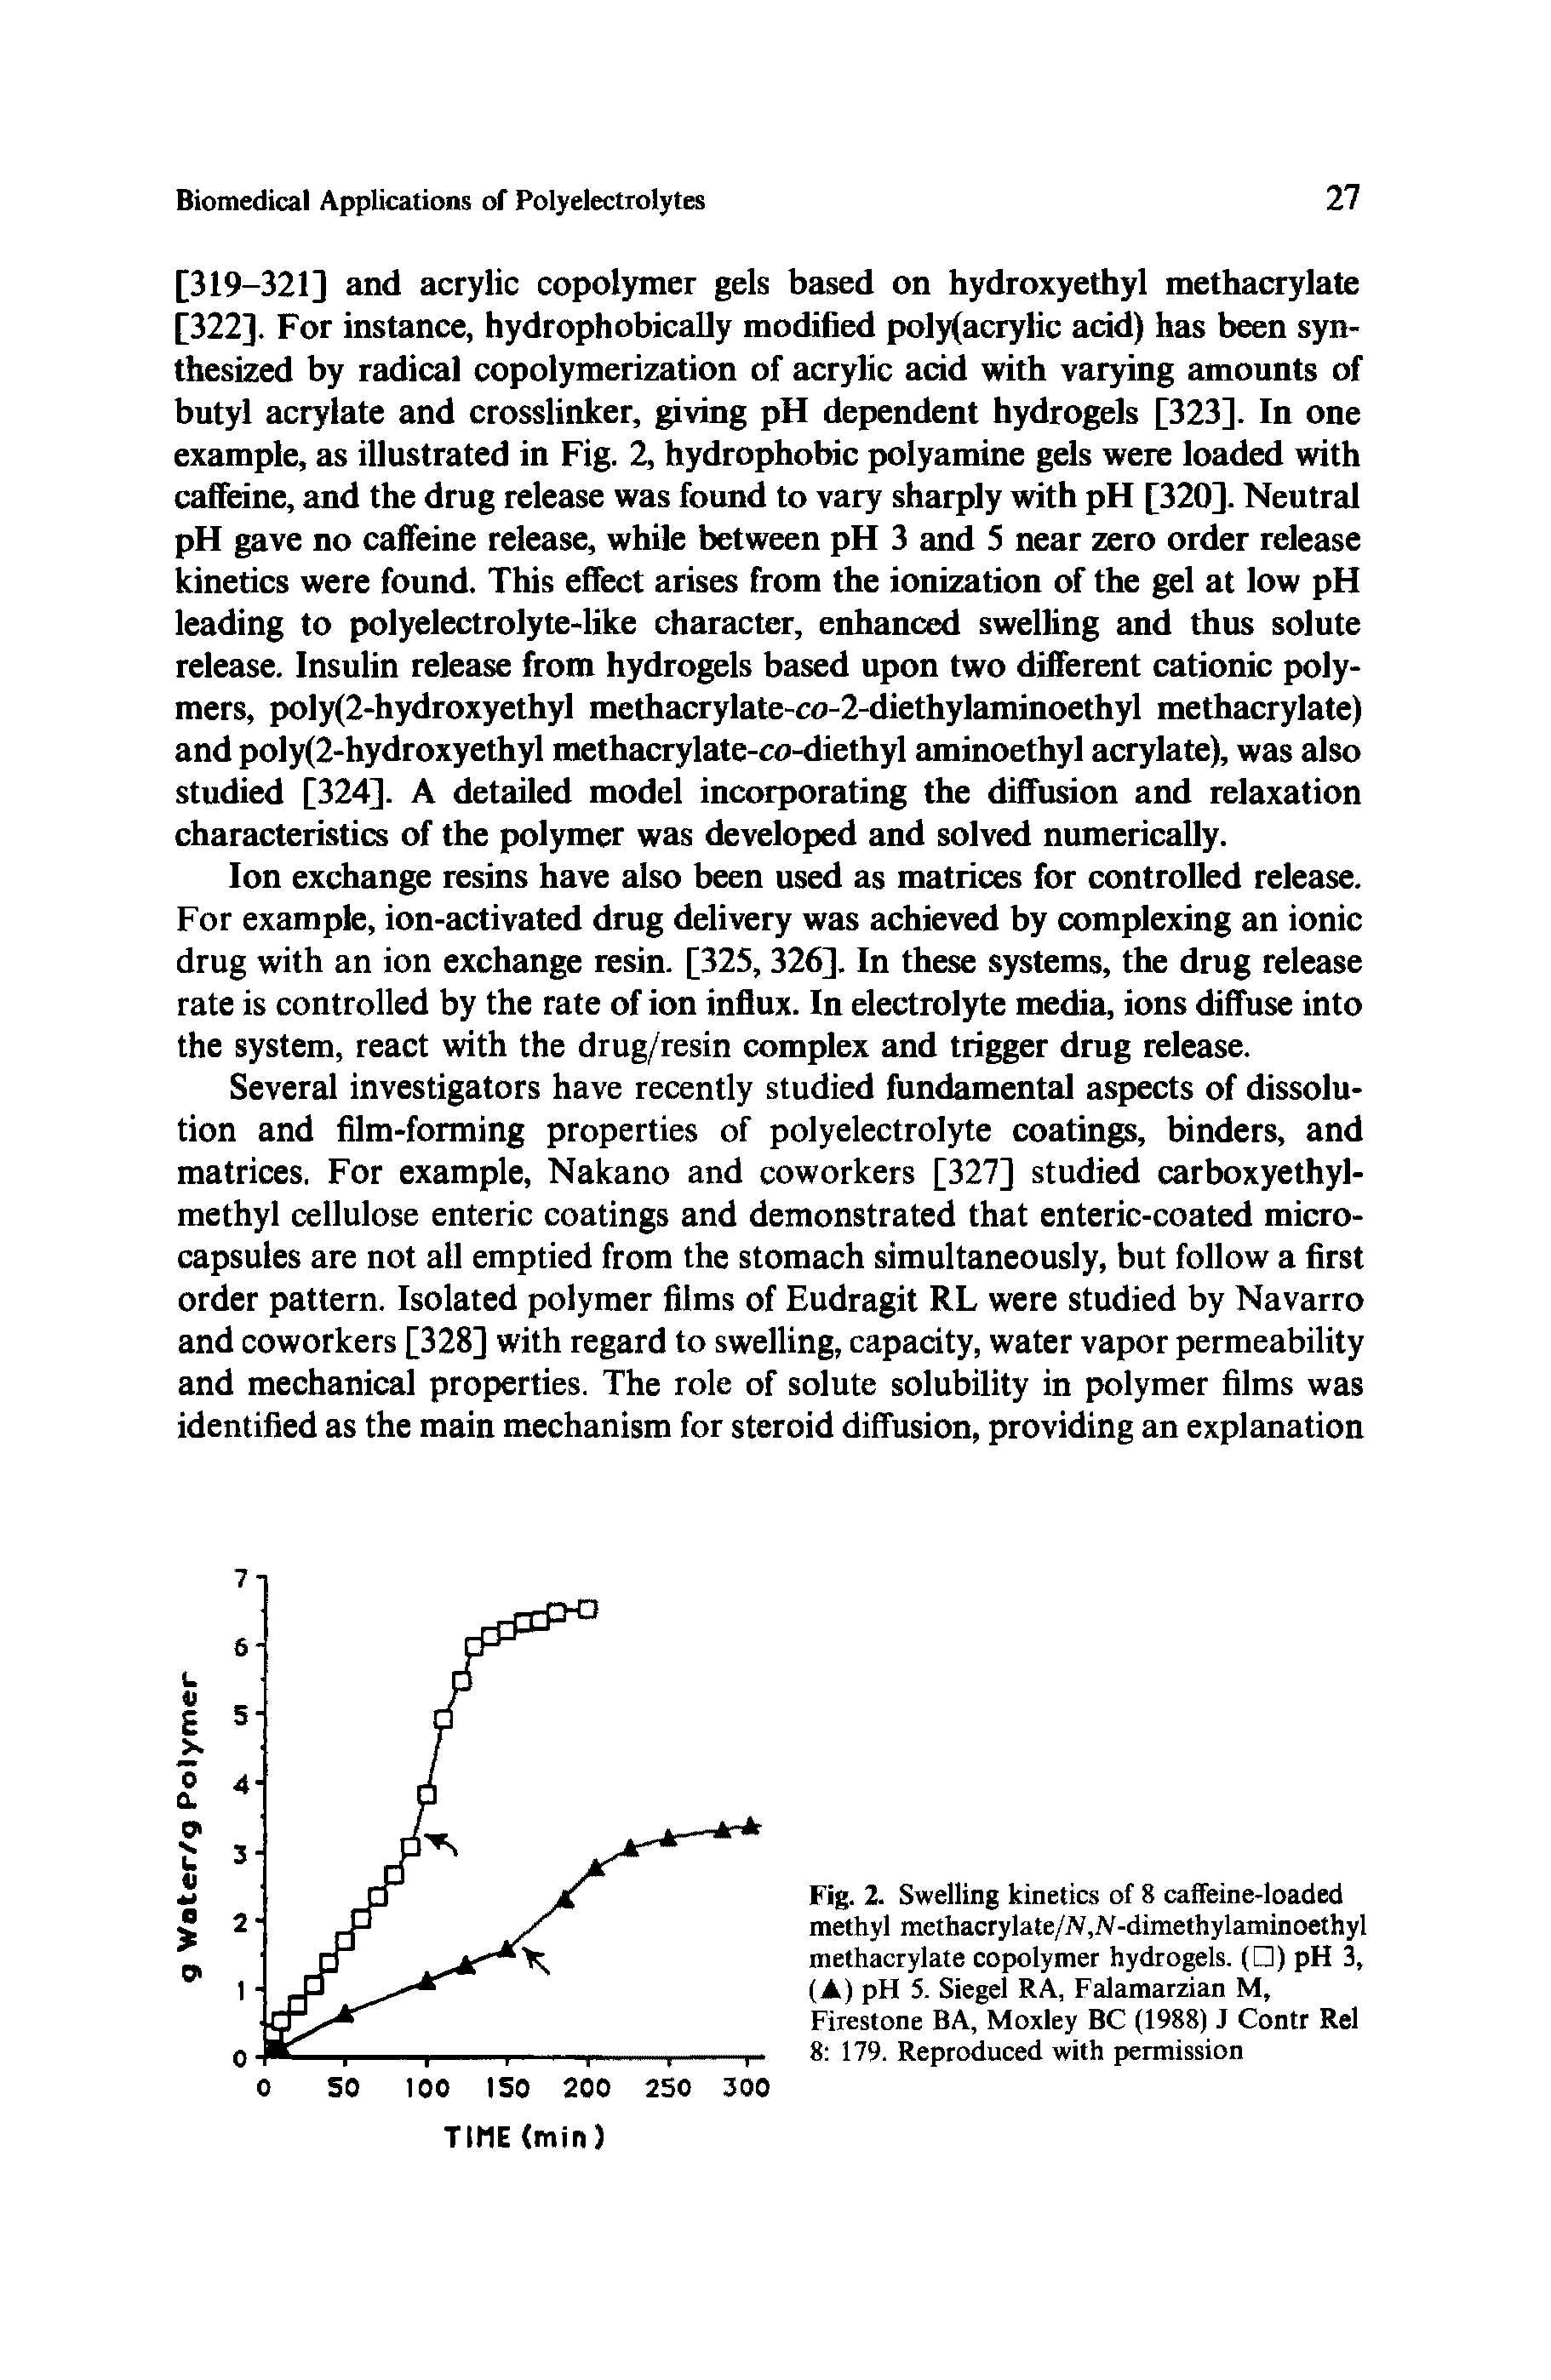 Fig. 2. Swelling kinetics of 8 caffeine-loaded methyl mcthacrylate/jV.A -dimethylaminoethyl methacrylate copolymer hydrogels. ( ) pH 3, (A) pH 5. Siegel RA, Falamarzian M, Firestone BA, Moxley BC (1988) J Contr Rel 8 179. Reproduced with permission...